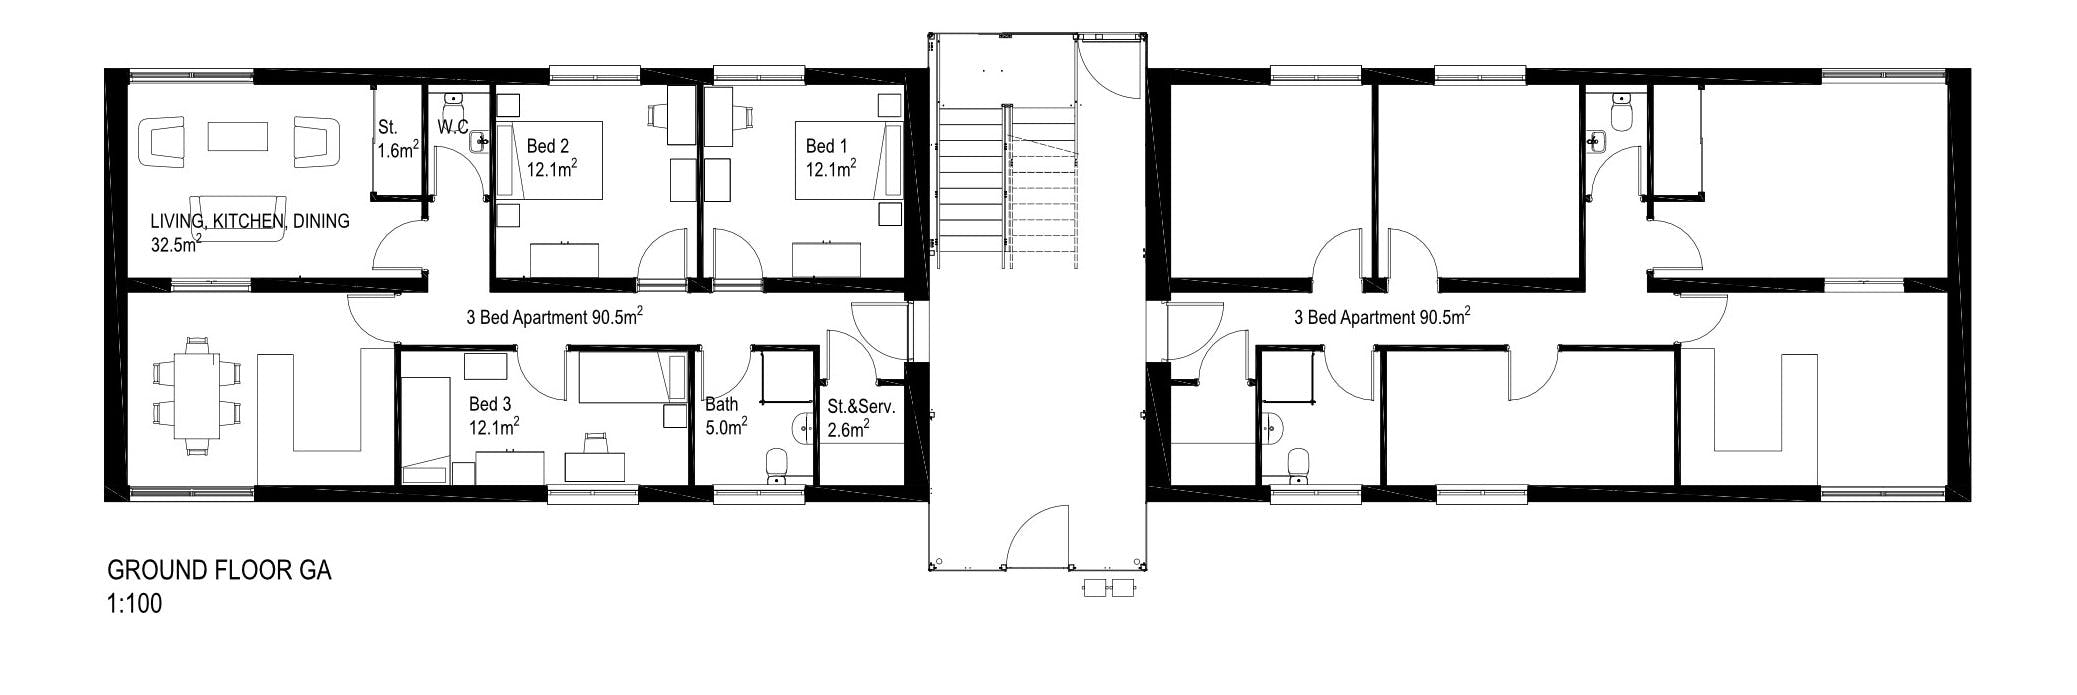 home design plan